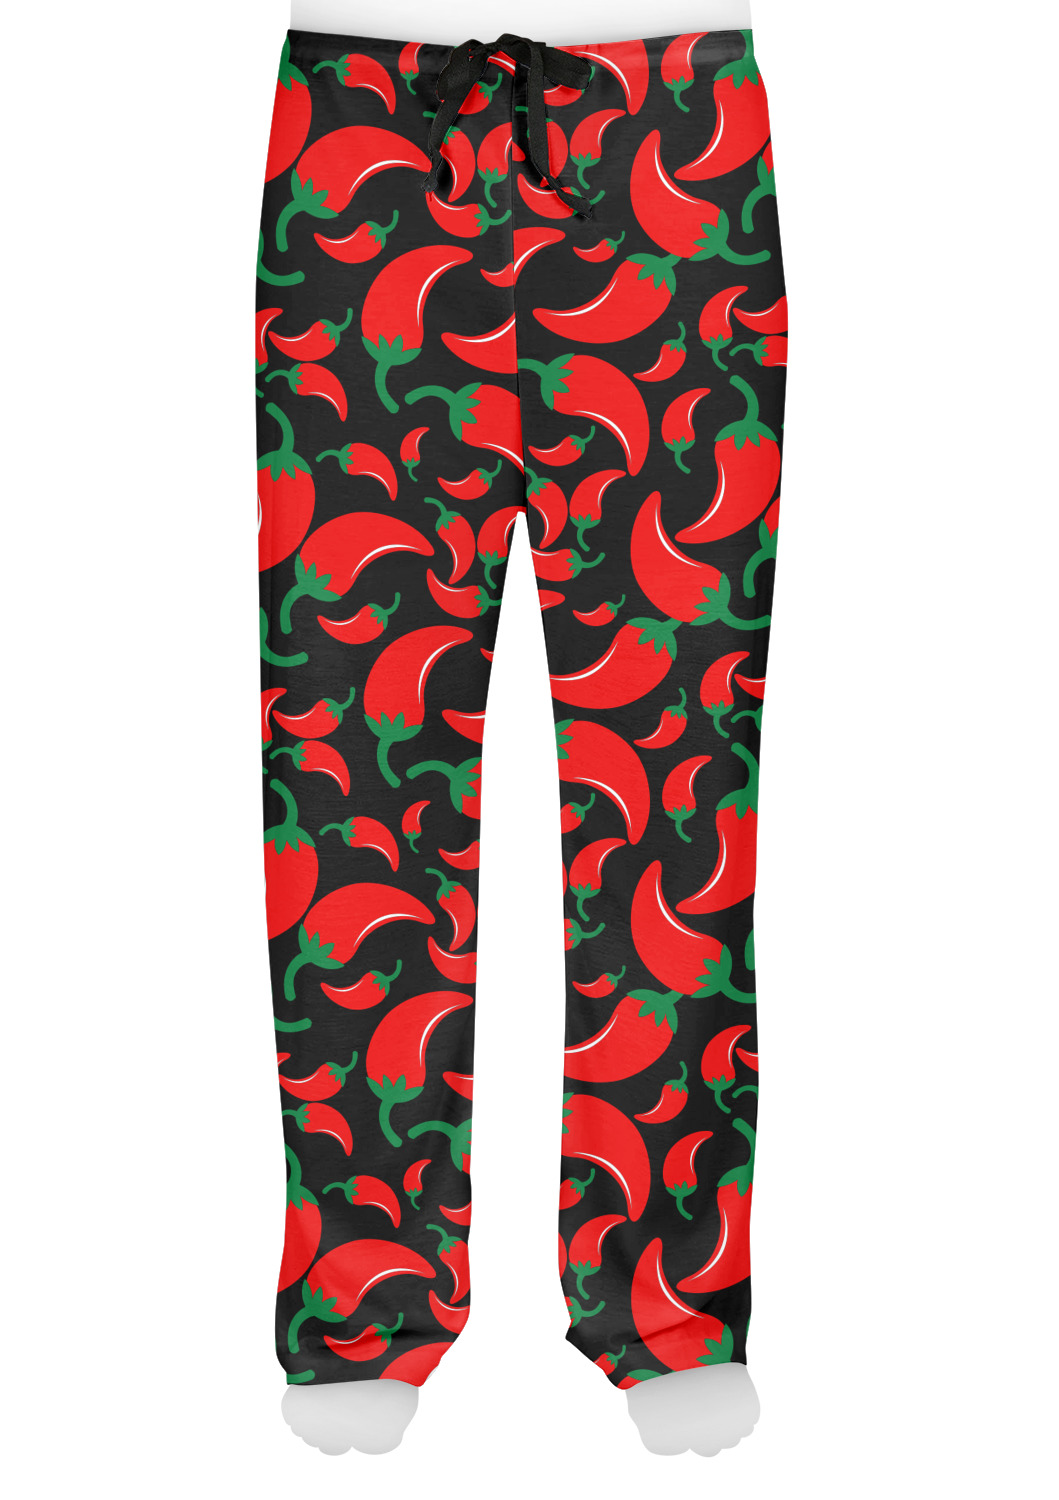 Custom Chili Peppers Mens Pajama Pants - L | YouCustomizeIt